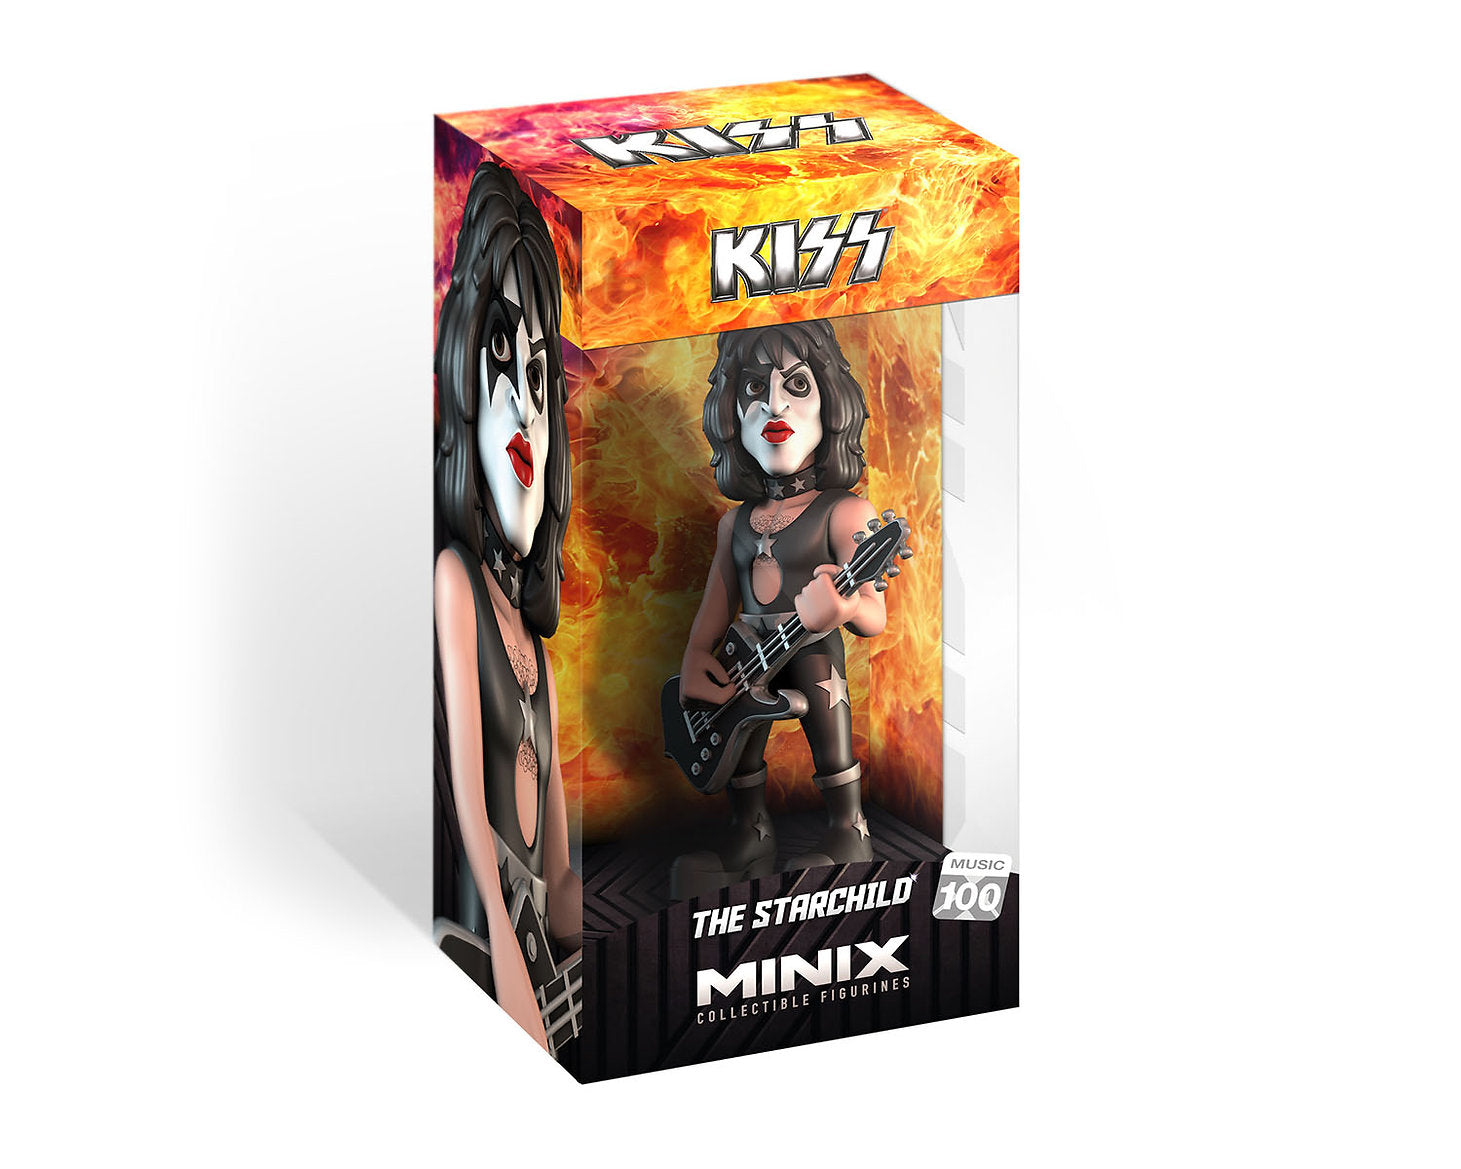 Minix -MUSIC -KISS -THE STARCHILD -Figurine -12 cm